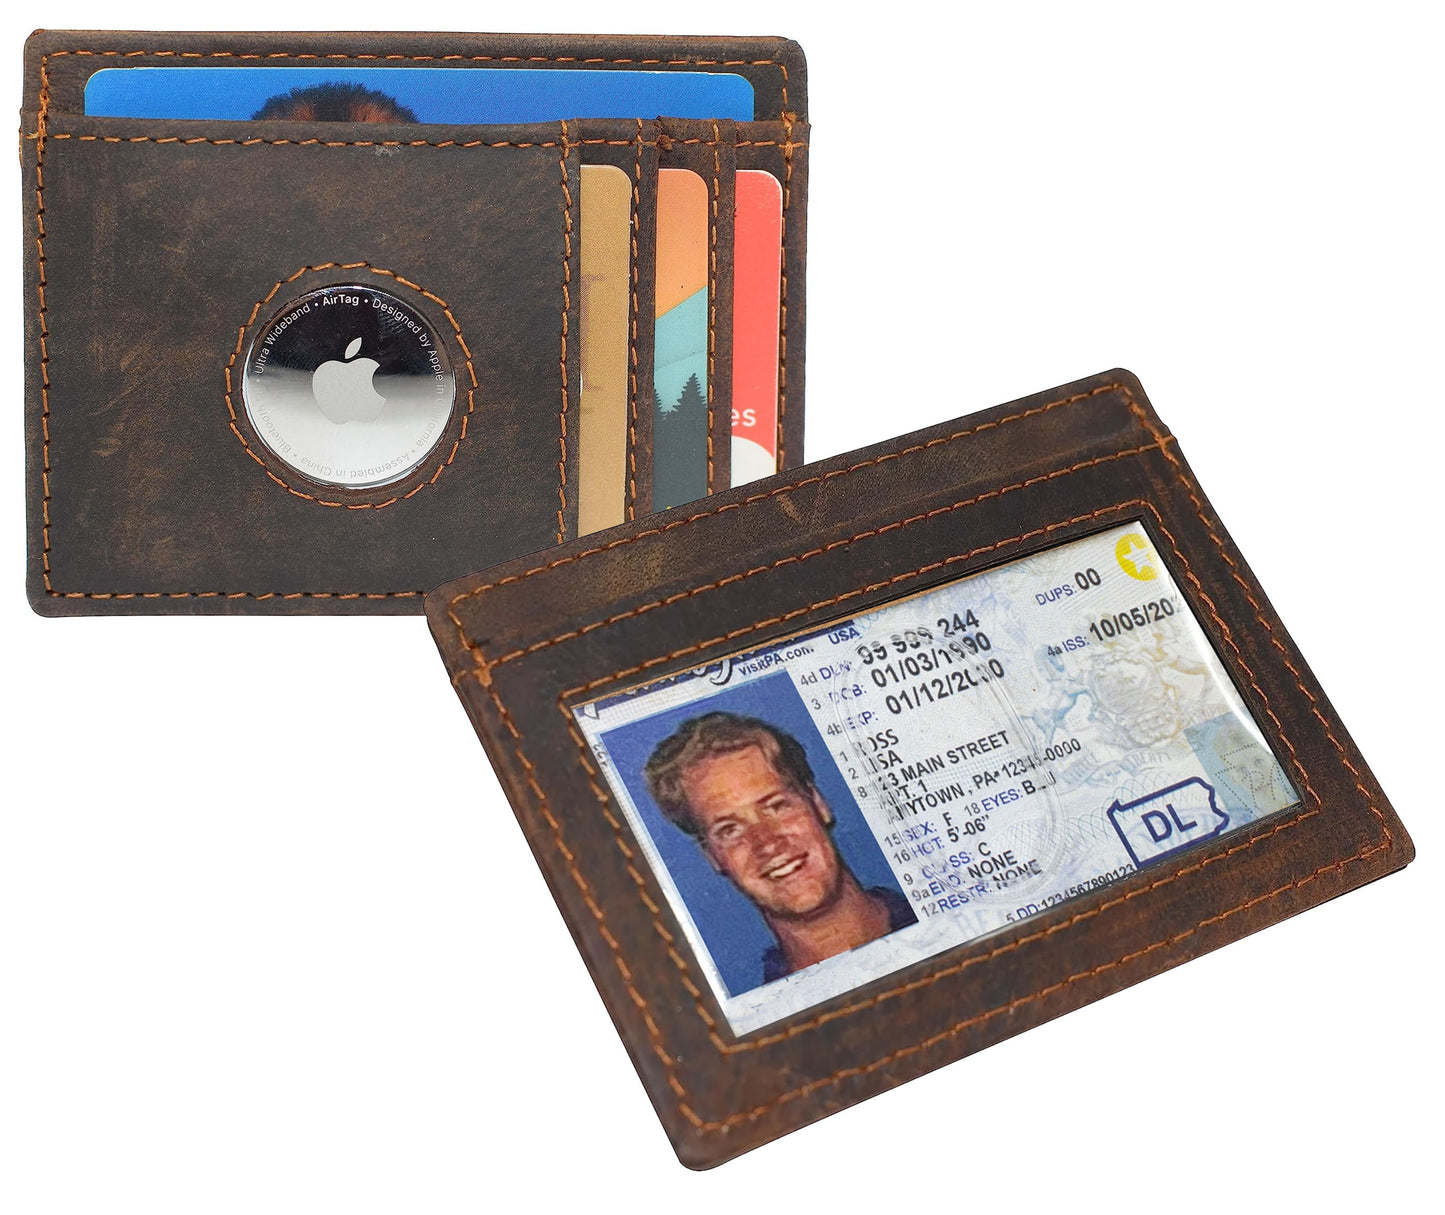 Hunter Brown Leather Men's Slim Minimalist Card Holder Wallet Airtag